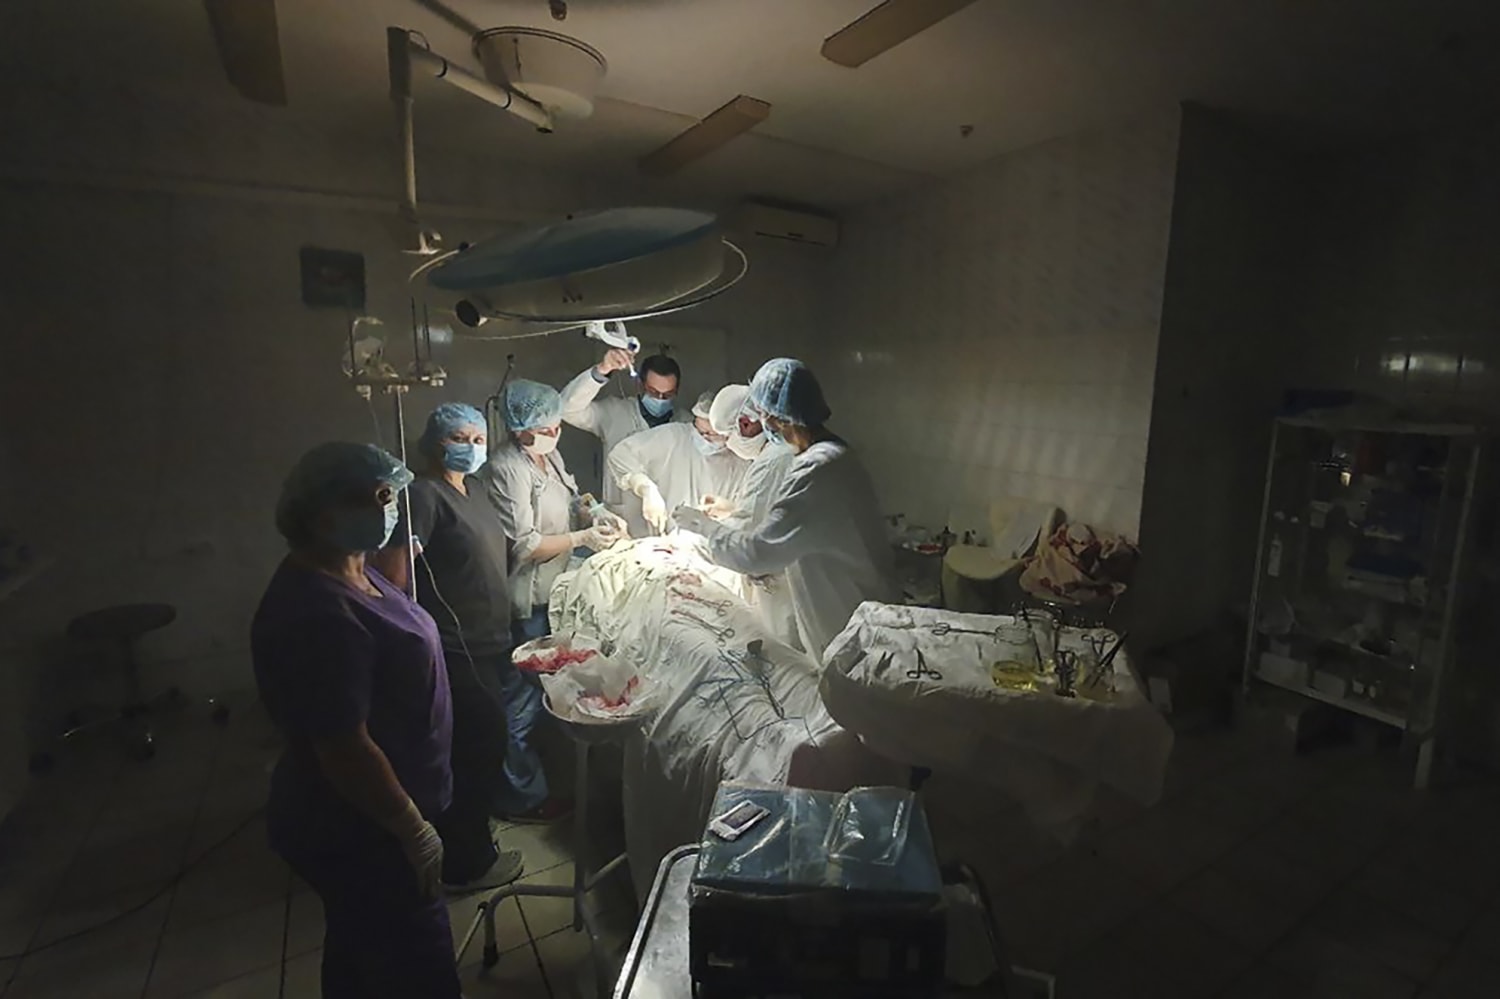 Surgeons work with flashlight as Russian strikes batter Ukraine’s power grid